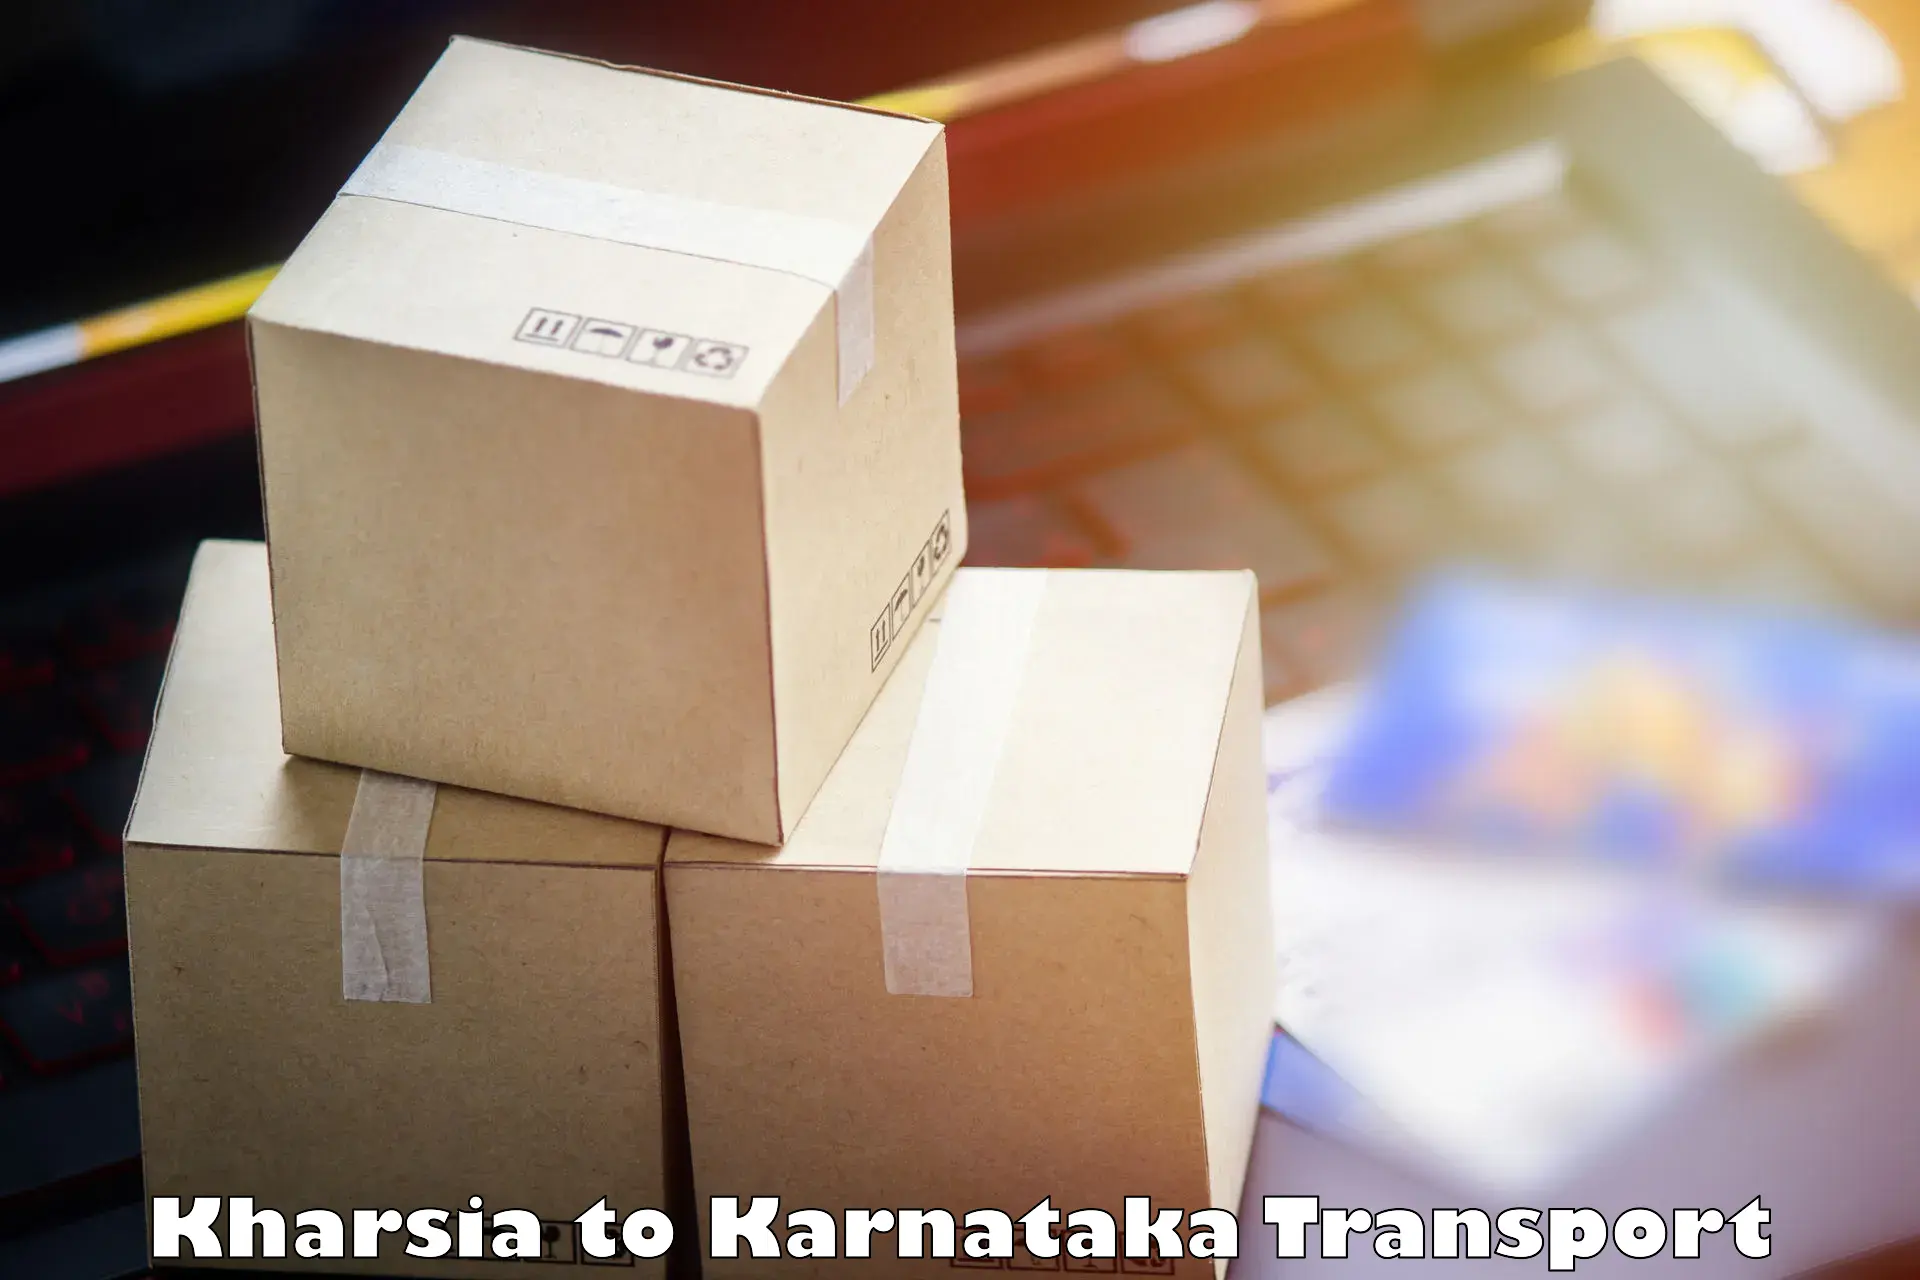 Pick up transport service Kharsia to Belgaum